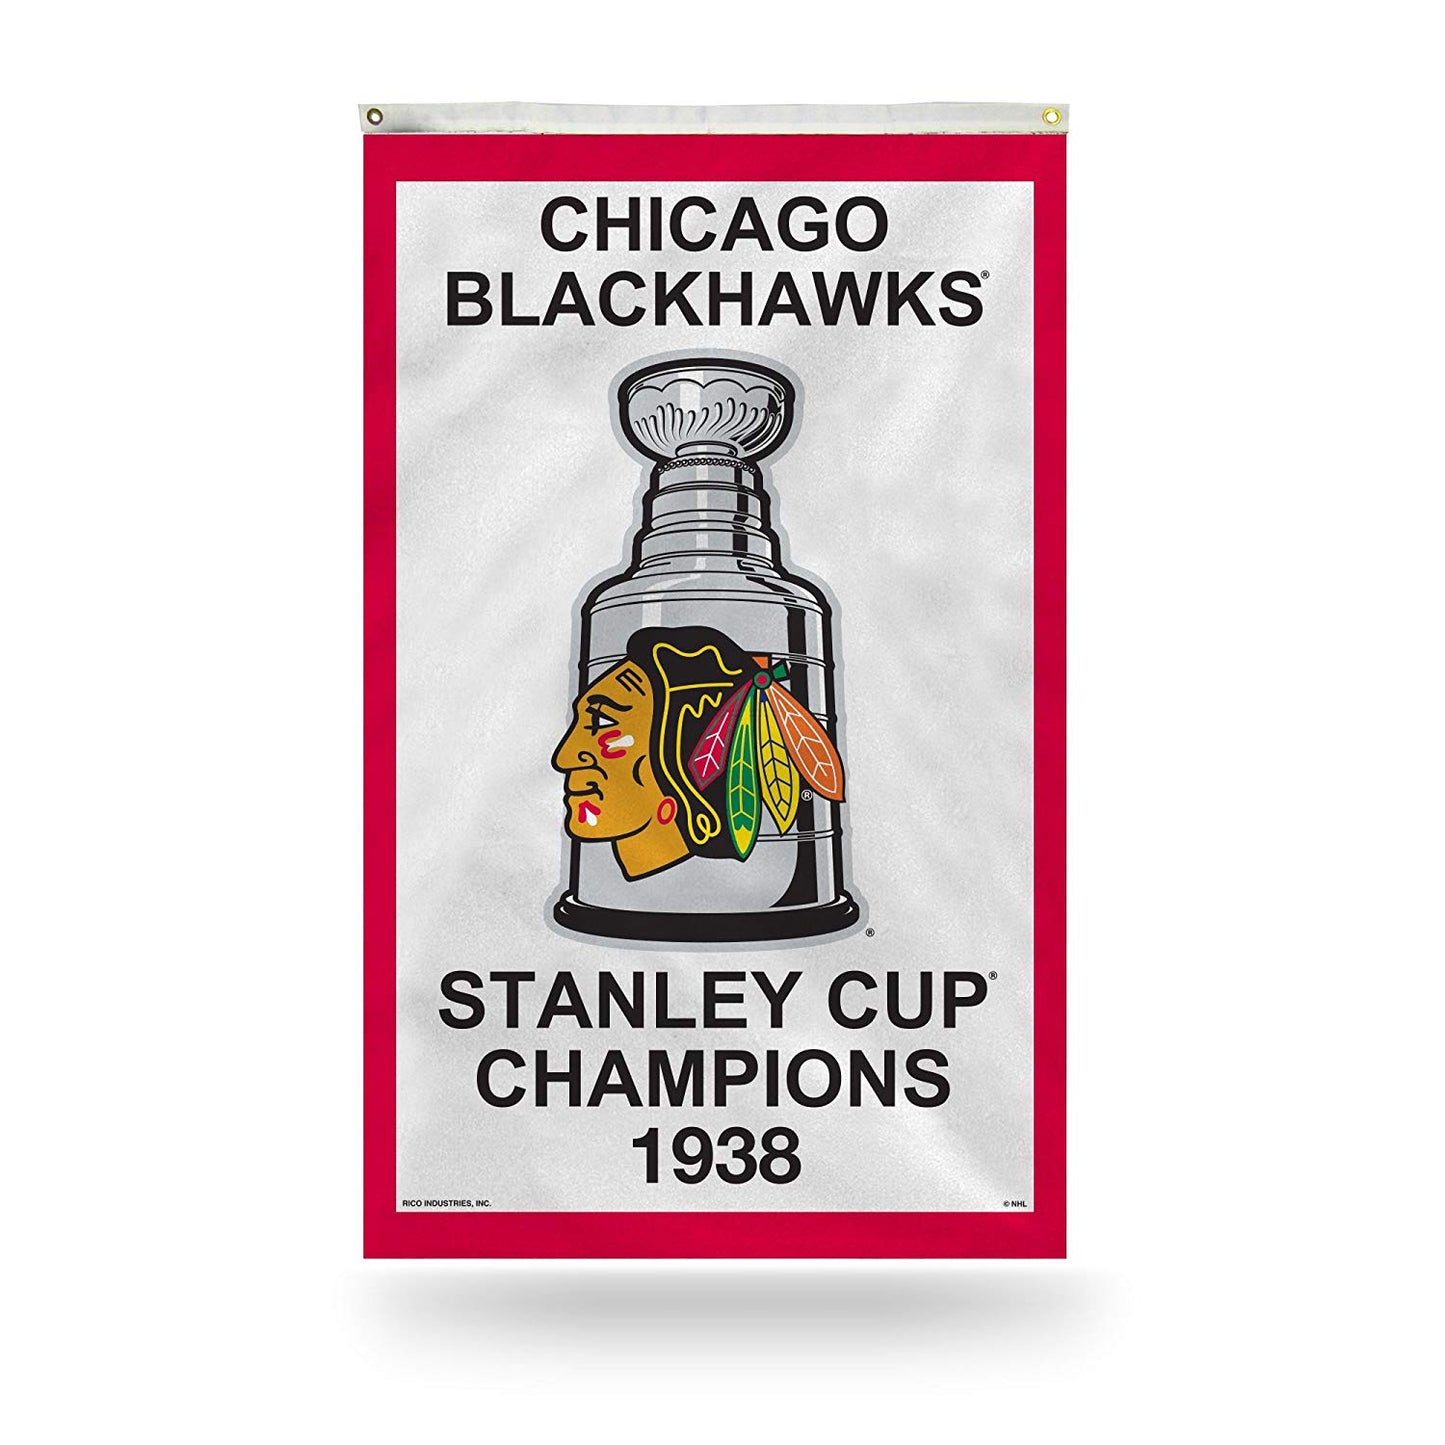 Chicago Blackhawks 1938 Stanley Cup Champions 3' x 5' Vertical Banner Flag